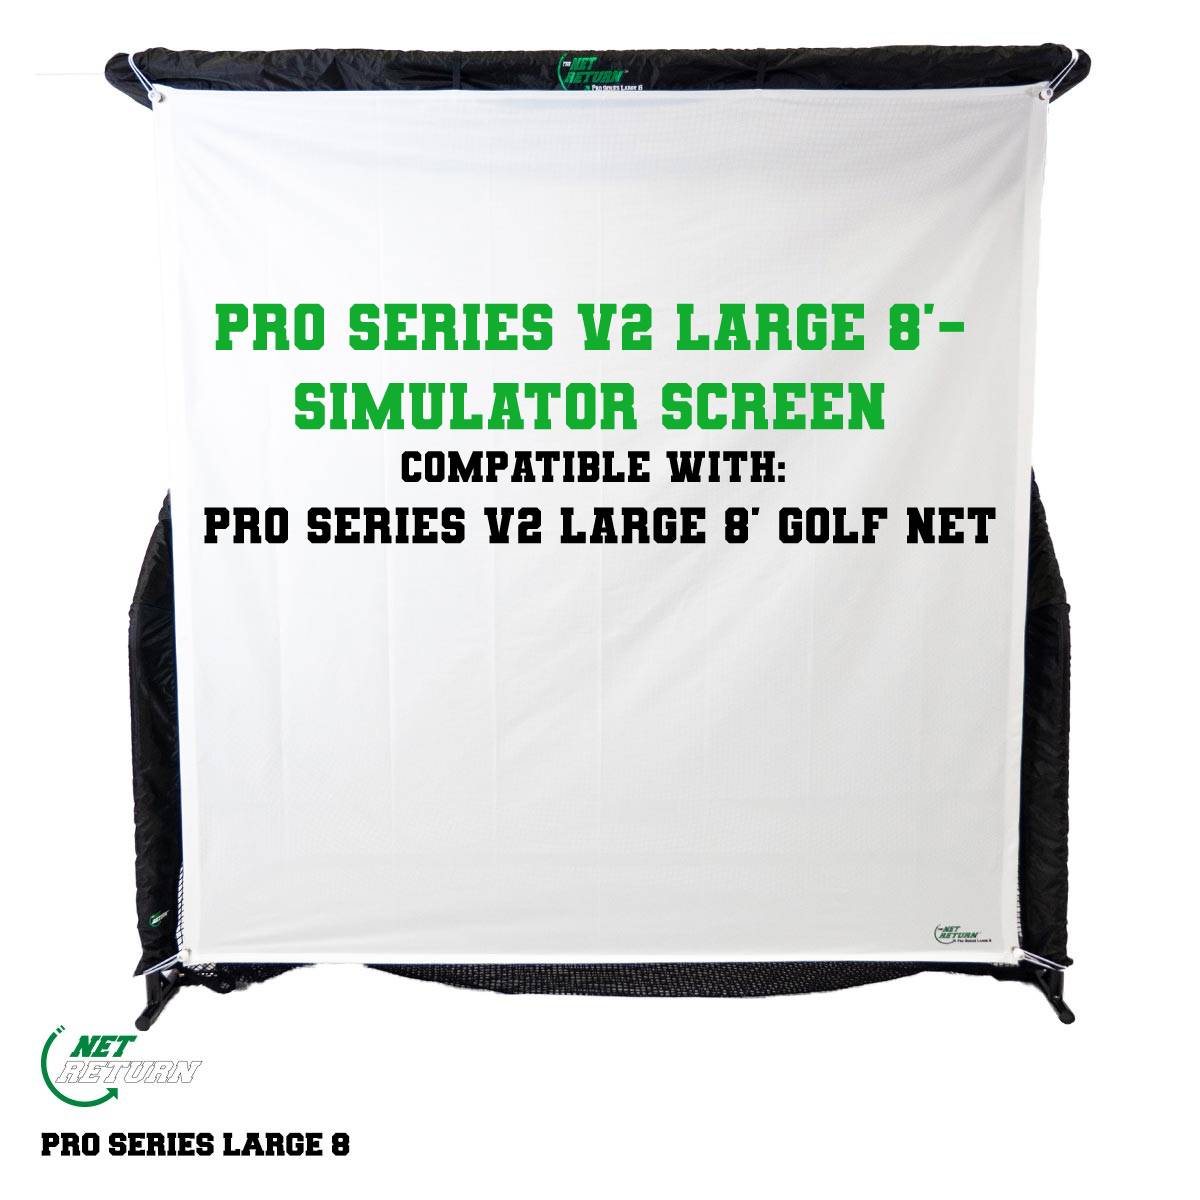 Pro Series V2 Large 8 Simulator Screen